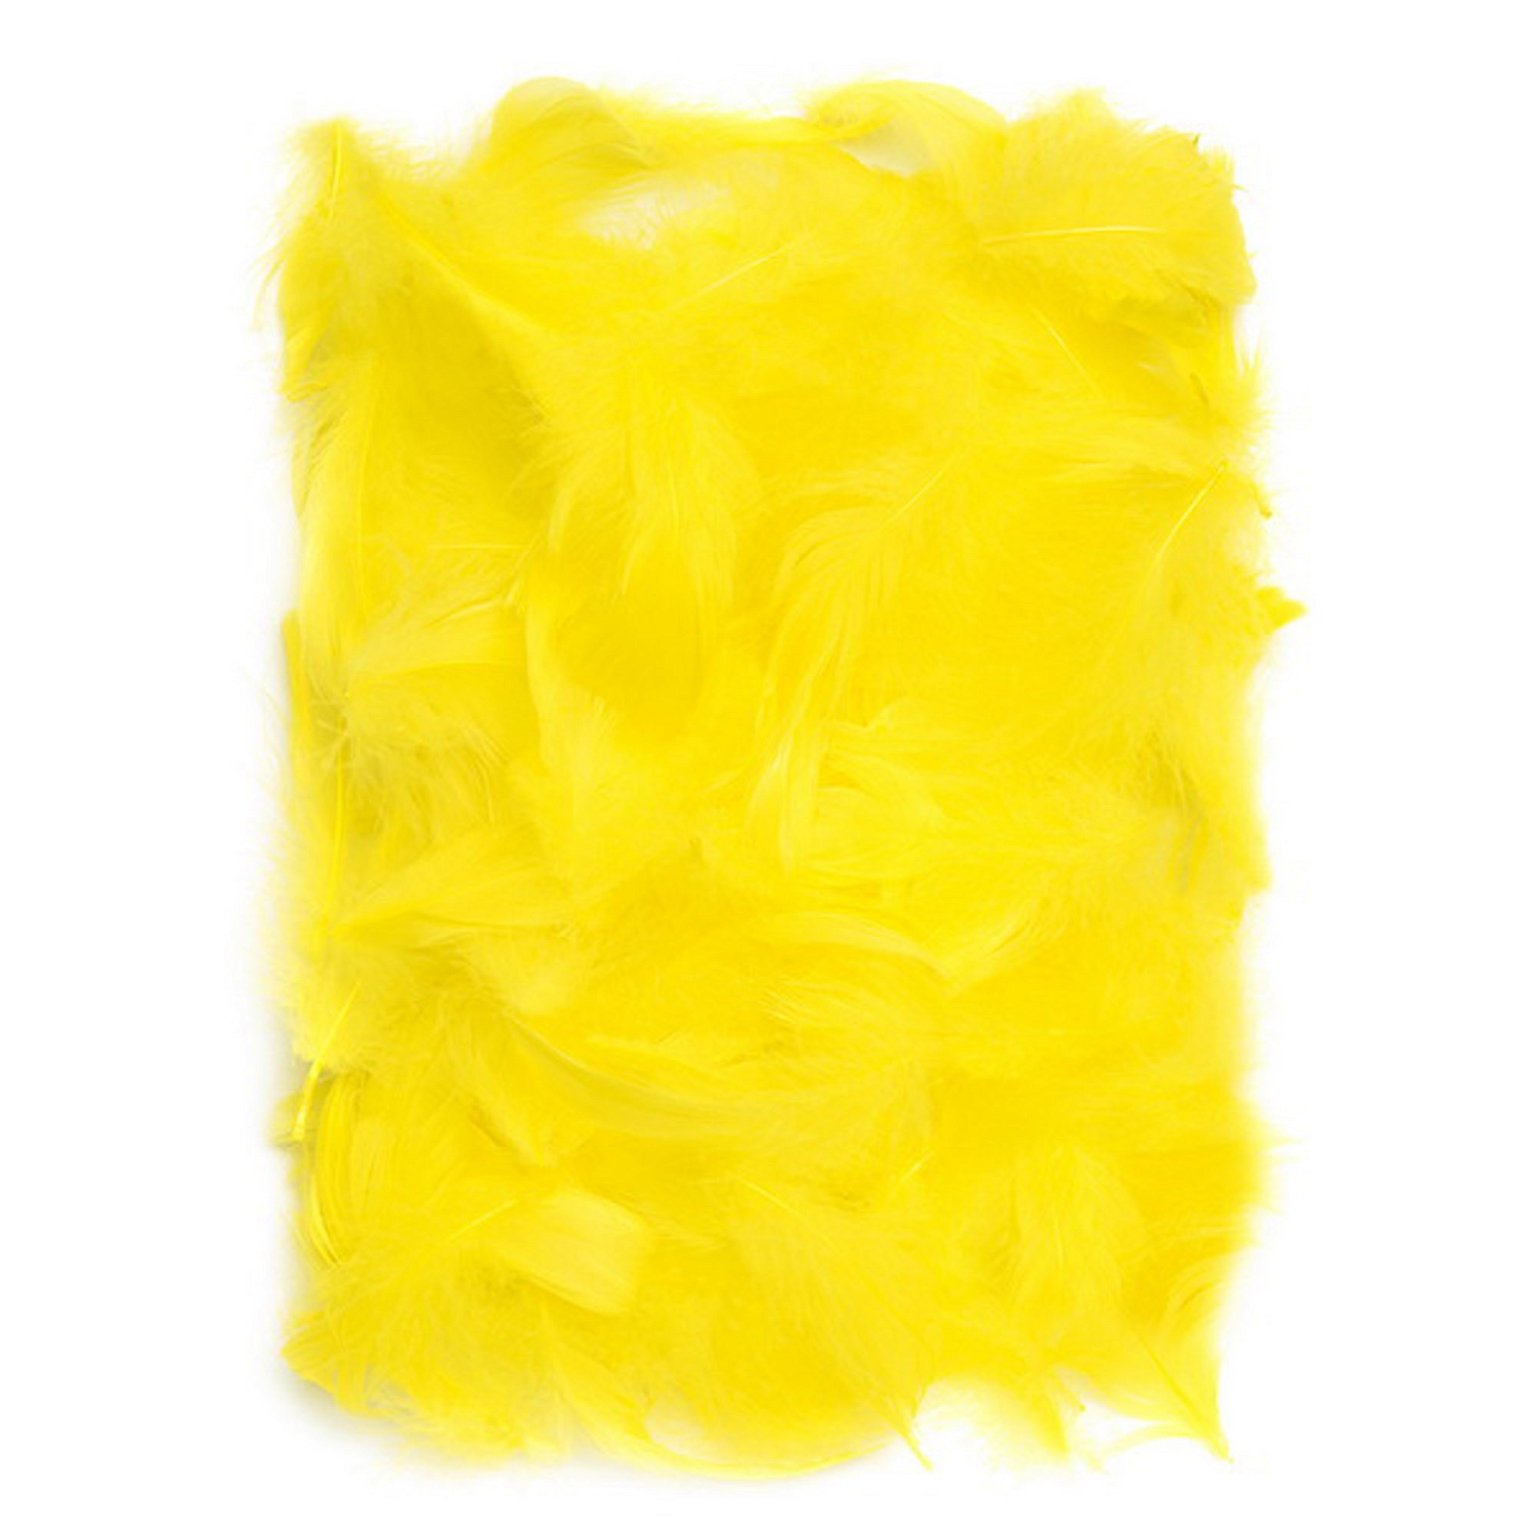 Plunksnos, 5-12 cm, 10 g, geltonos spalvos